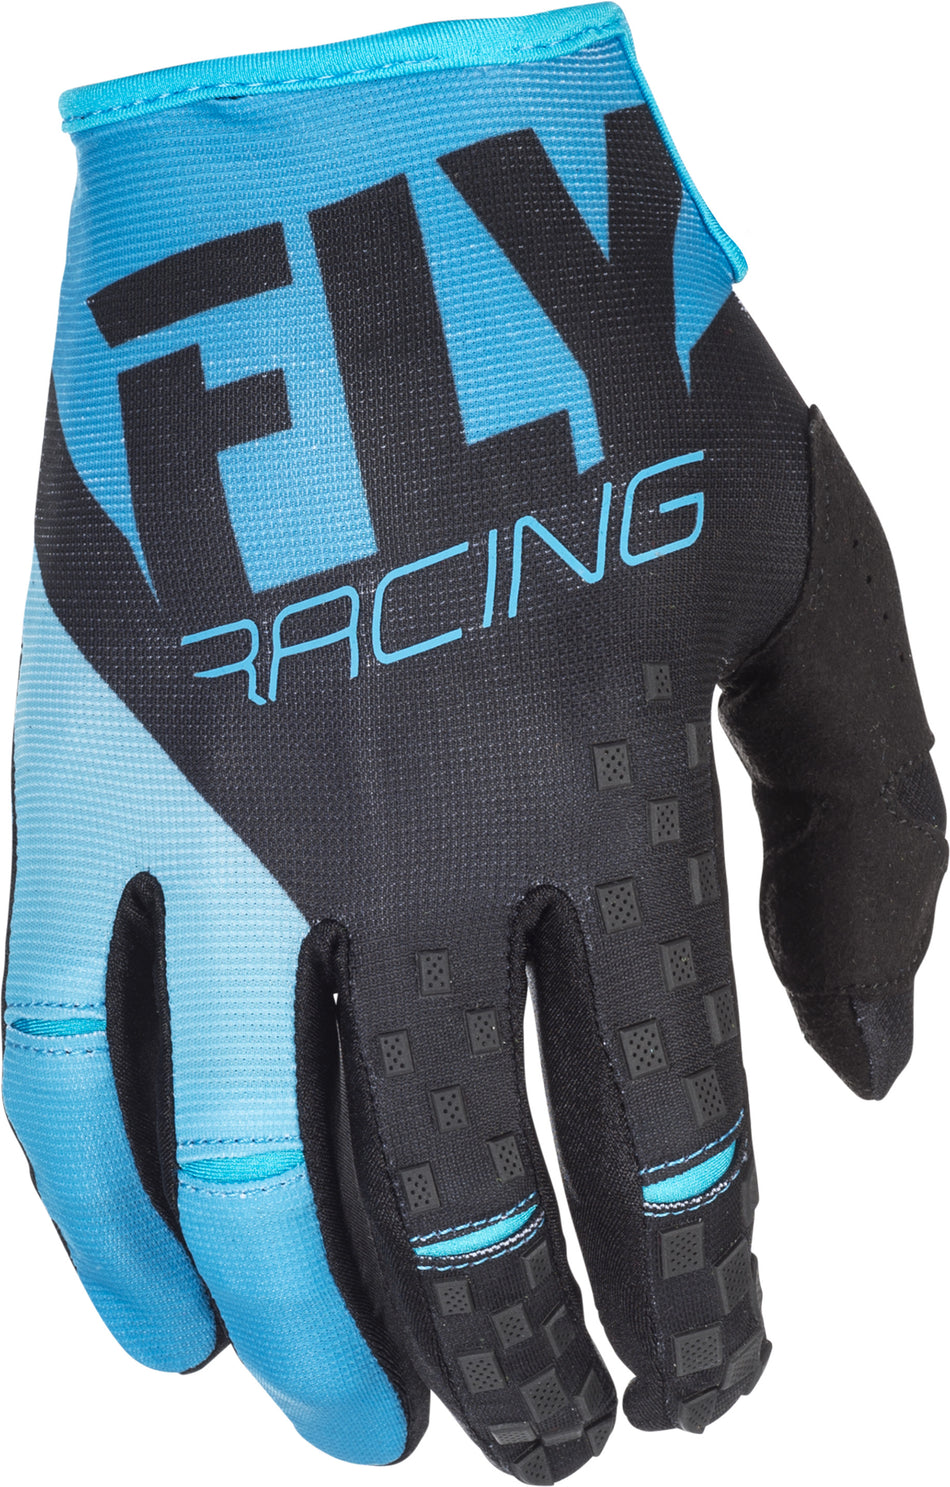 FLY RACING Kinetic Gloves Blue/Black Sz 8 371-41108